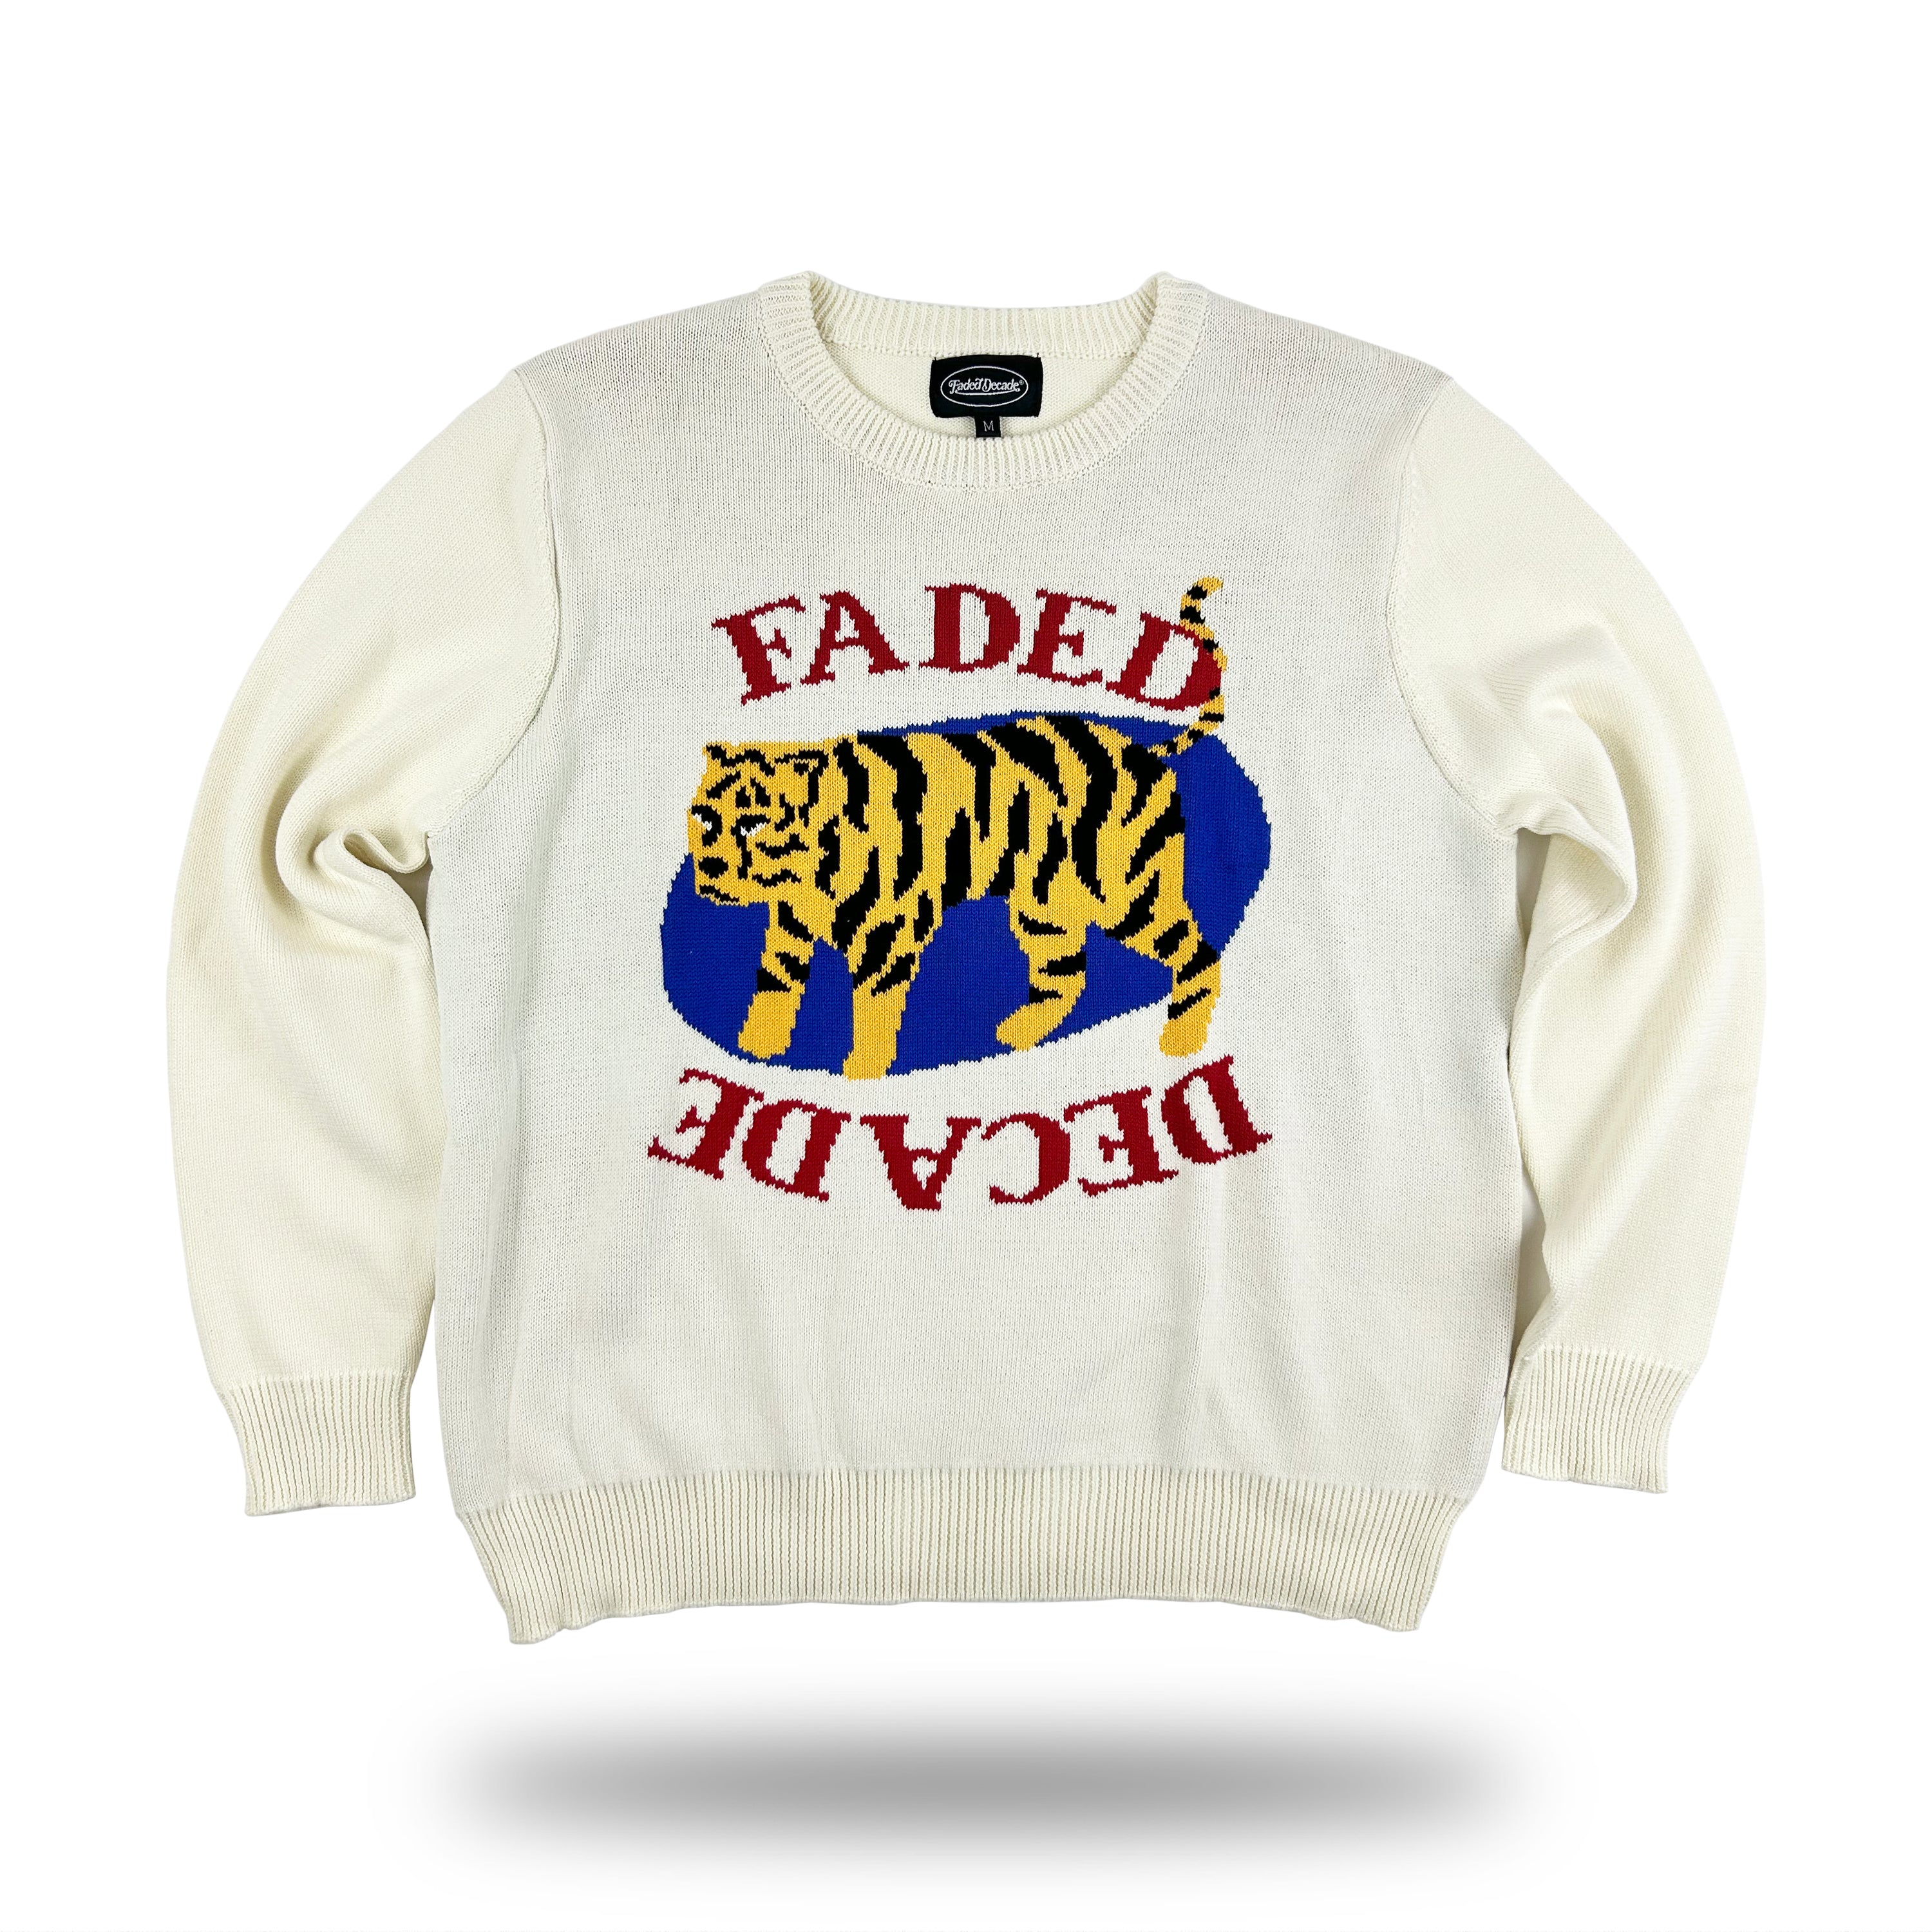 vintage faded drivers sweaterpunk